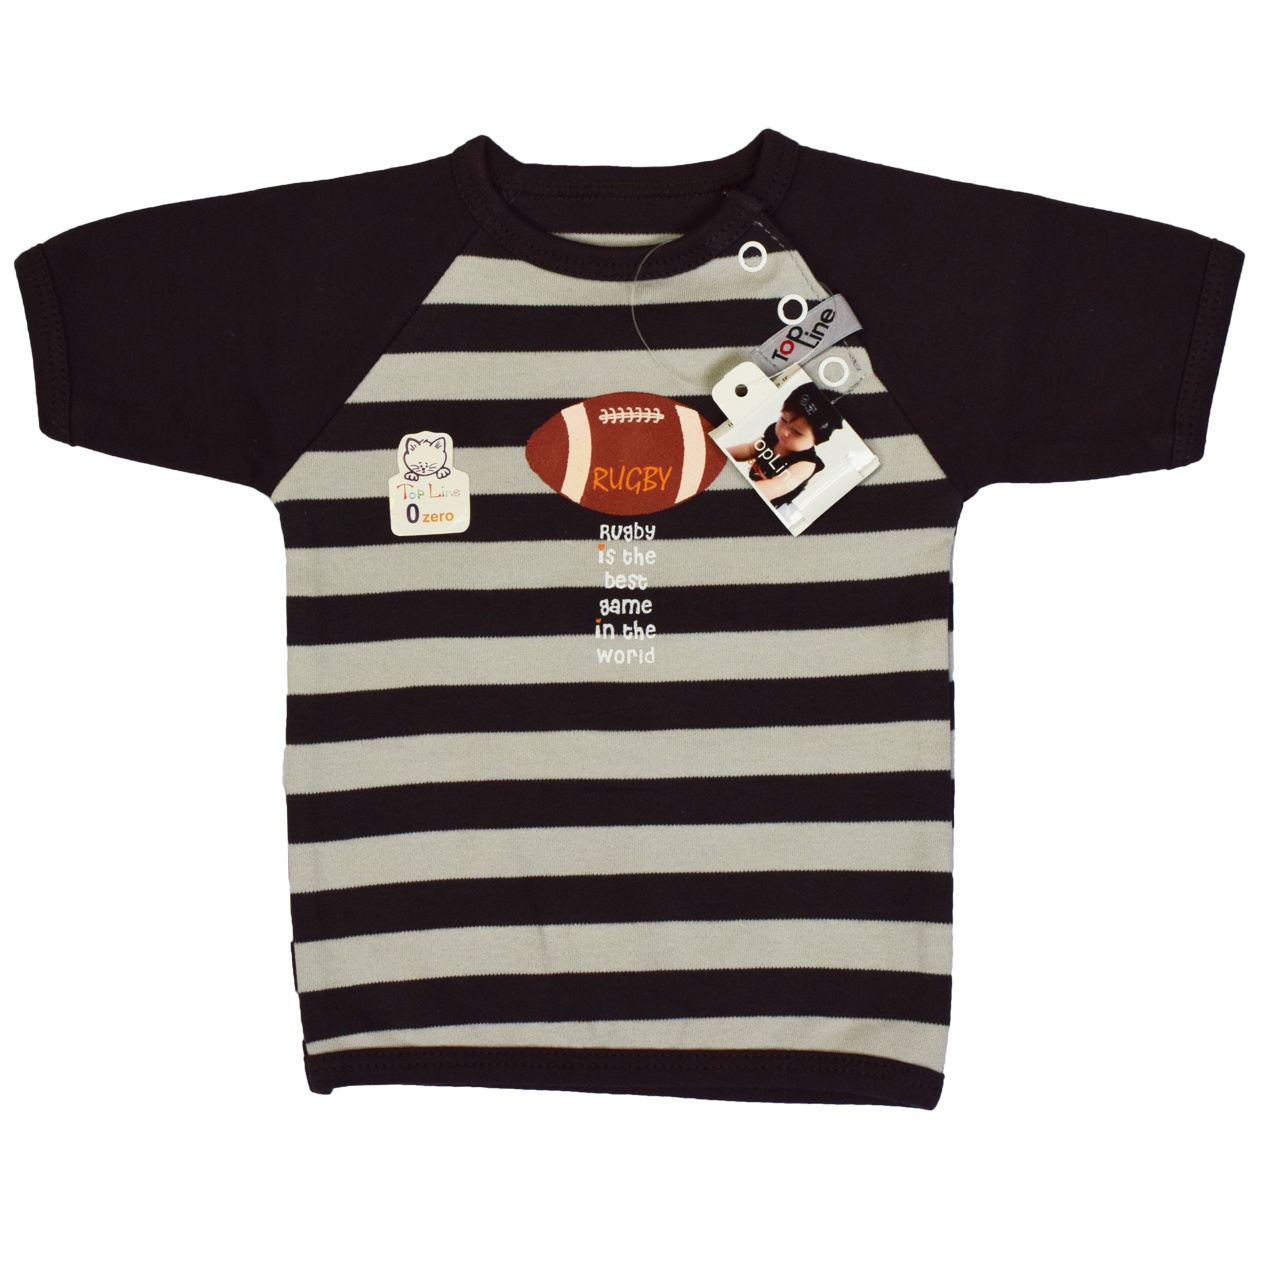 تی شرت آستین کوتاه نوزاد تاپ لاین طرح راگبی کد 02